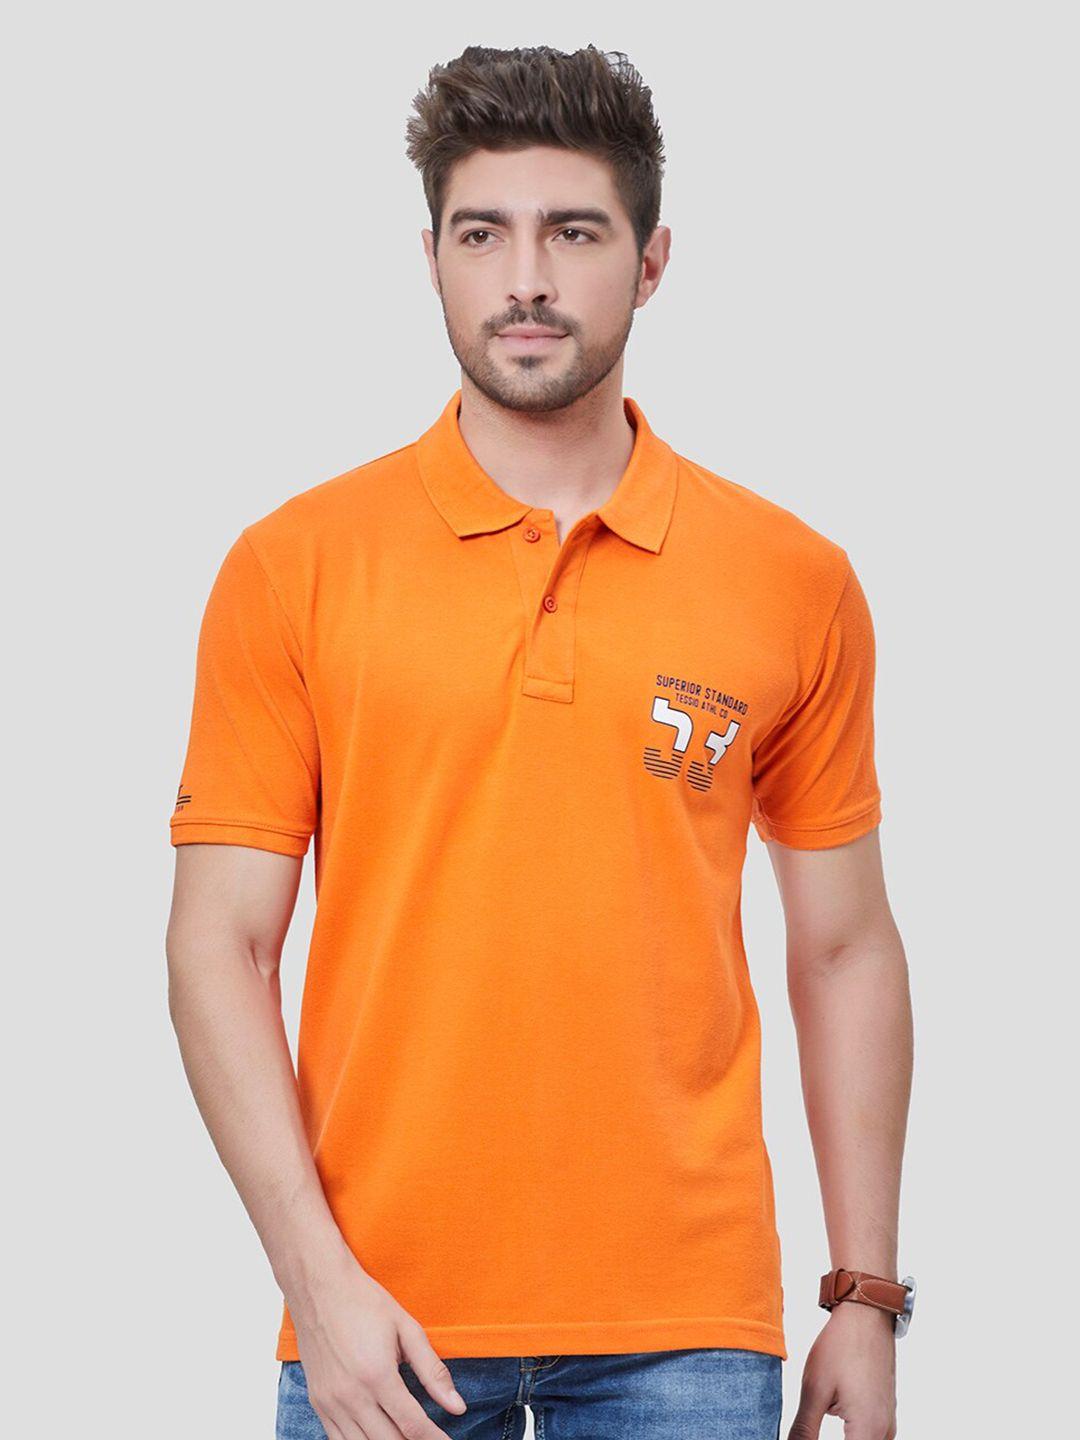 tessio men orange typography pockets t-shirt